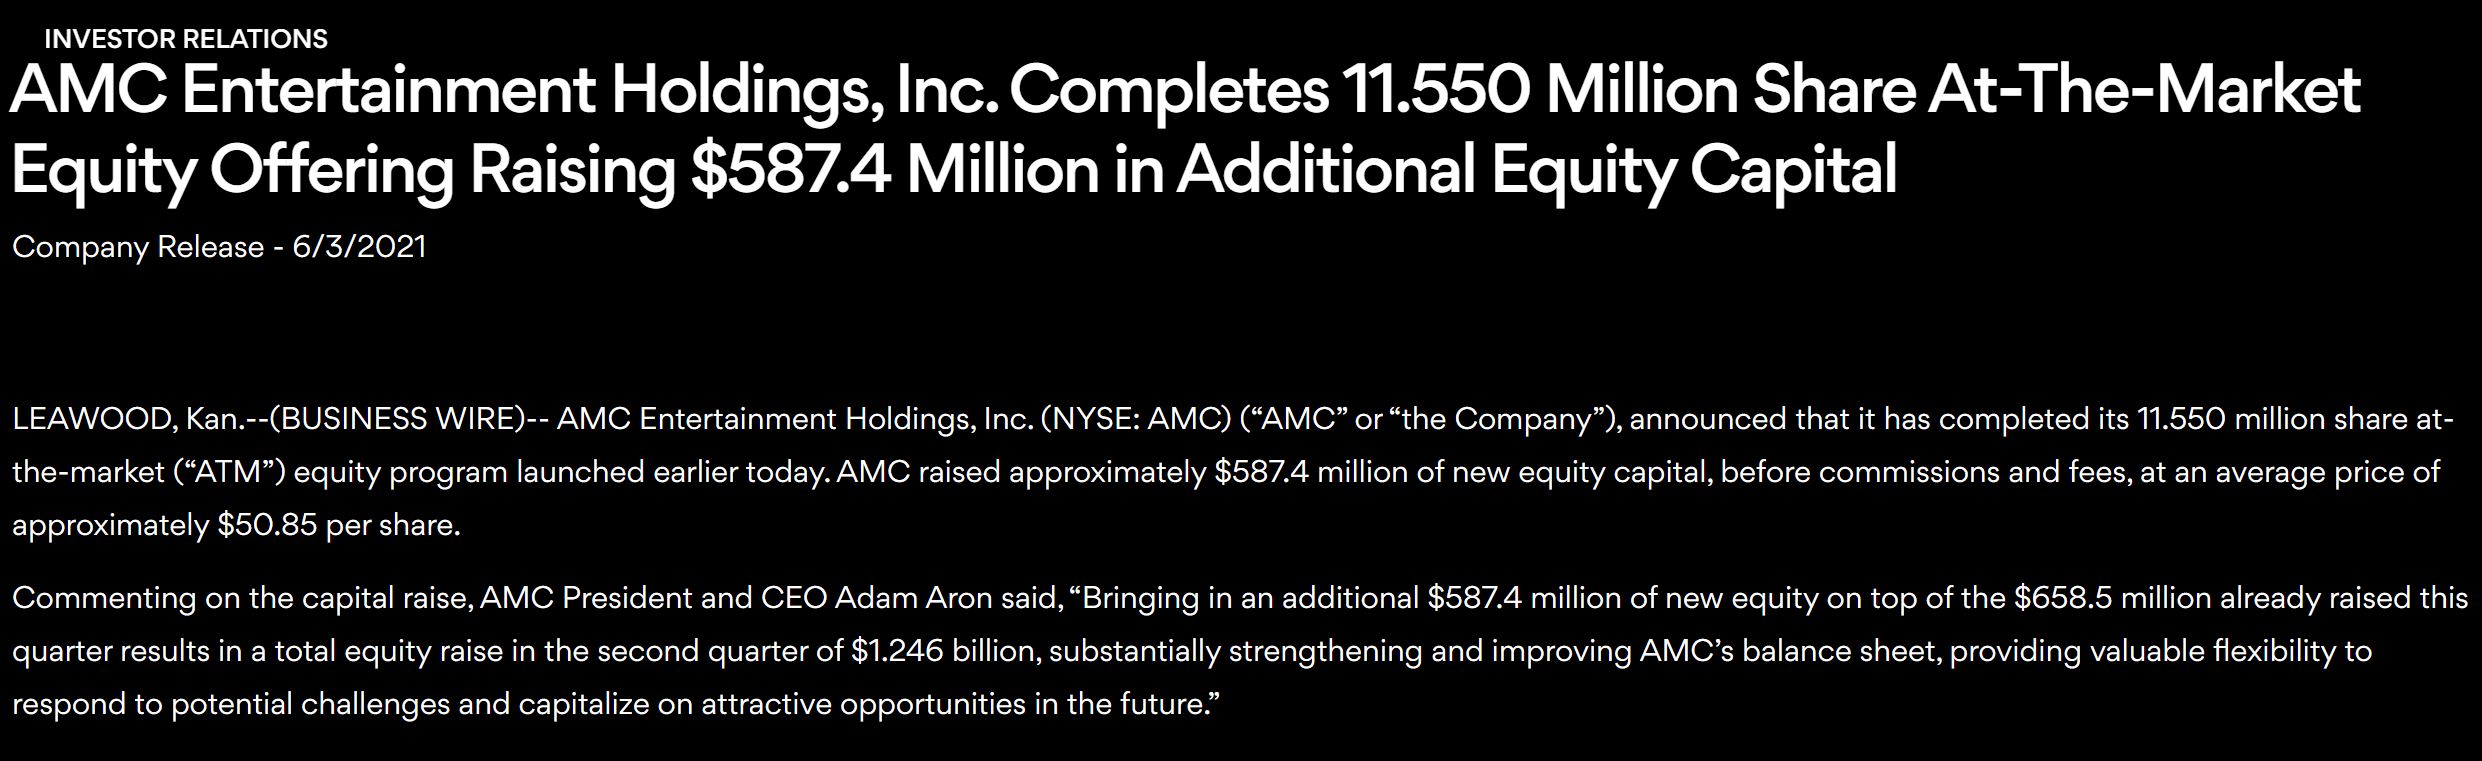 AMC院线再度完成大额股票出售 本季度狂揽12亿美元